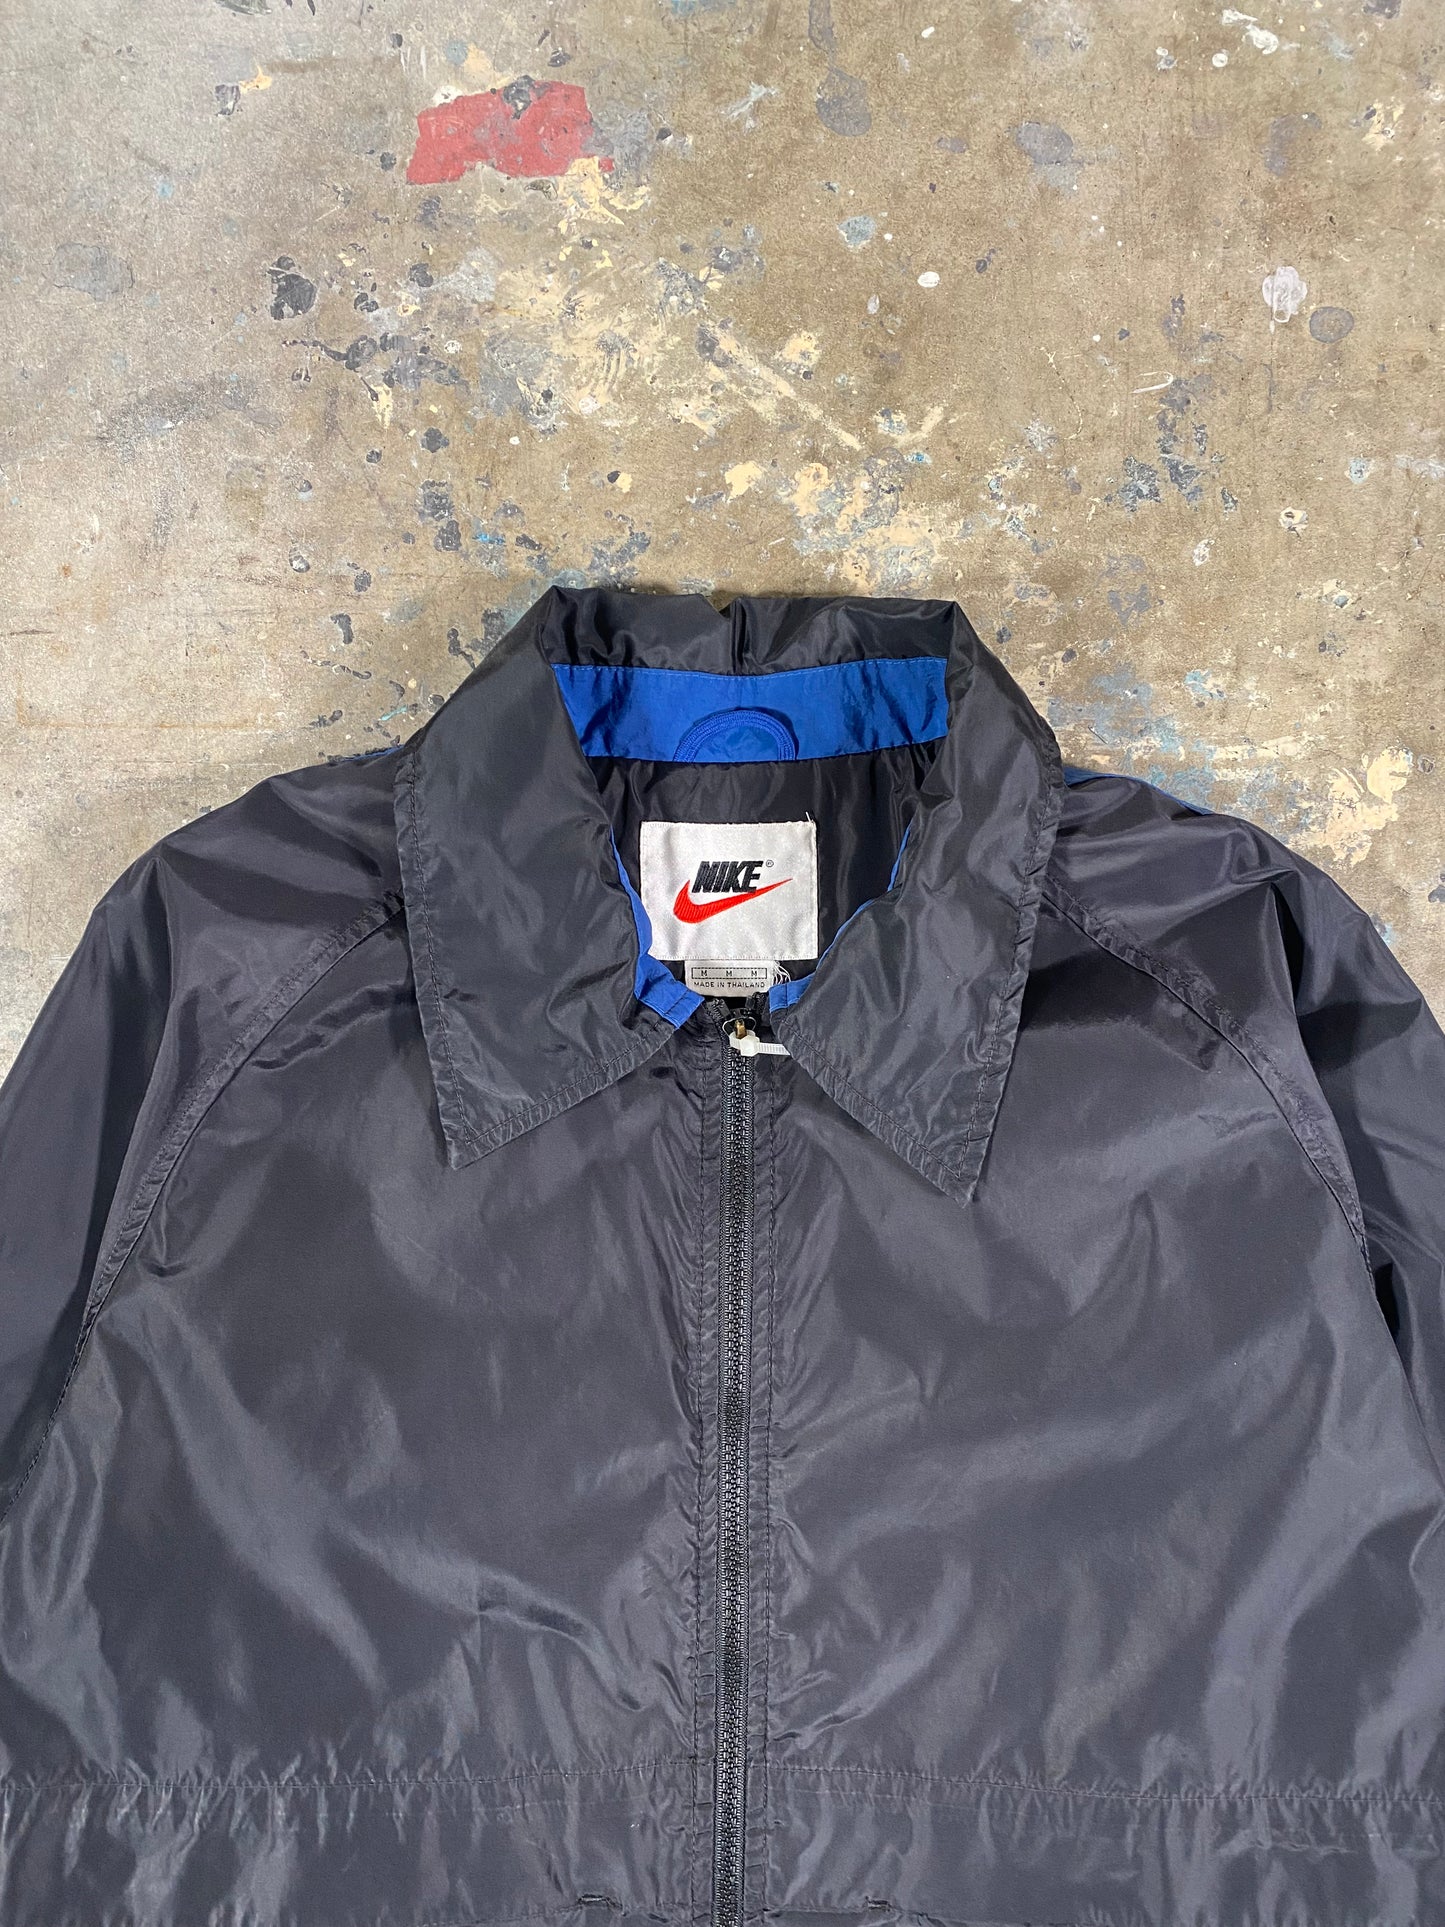 Nike Rain Jacket Embroidered Swoosh(XL)